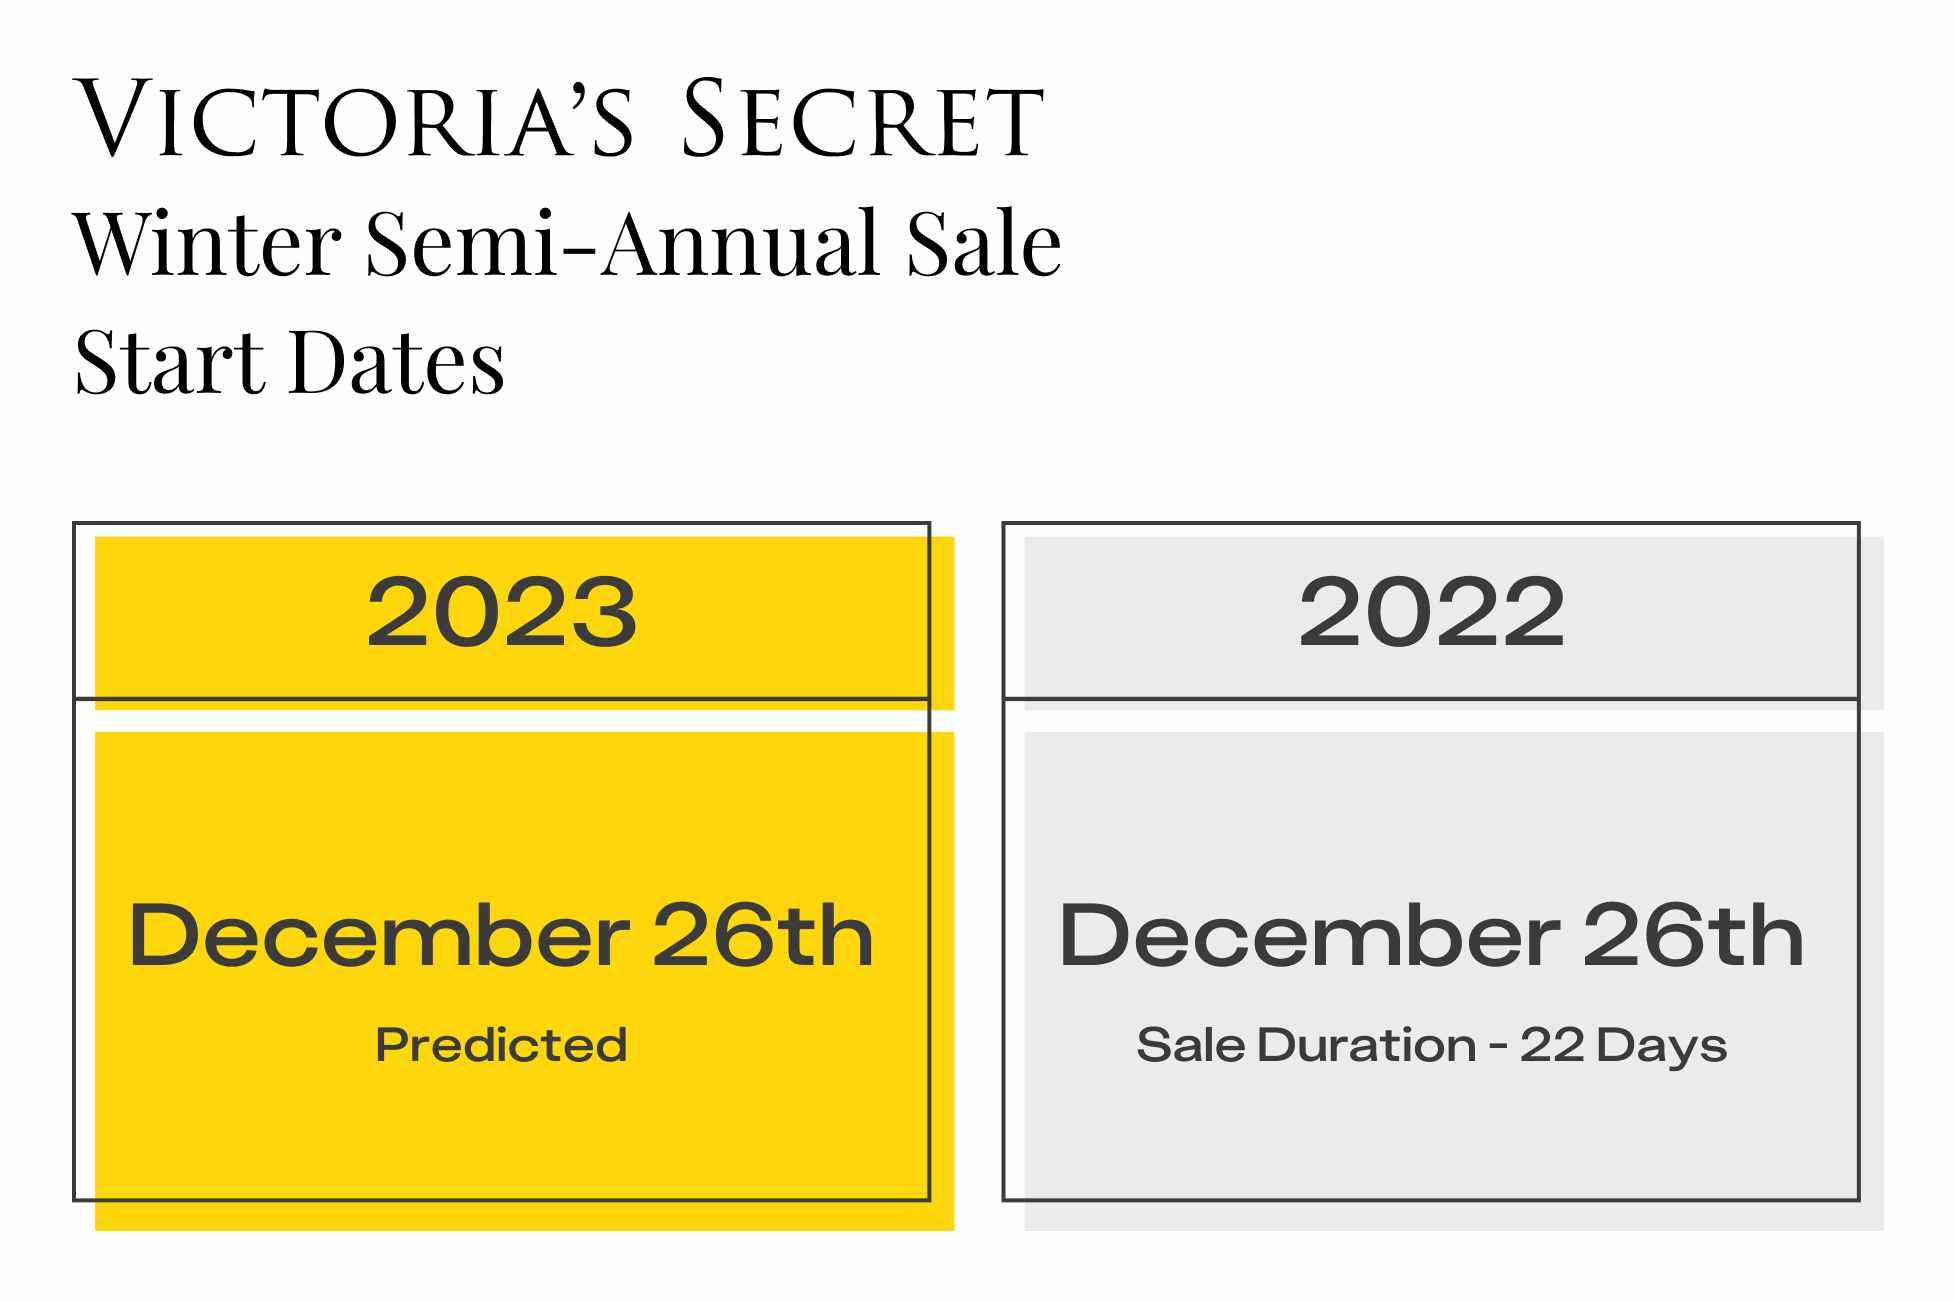 A graphic showing the start dates for the Victoria's Secret Winter Semi Annual Sale